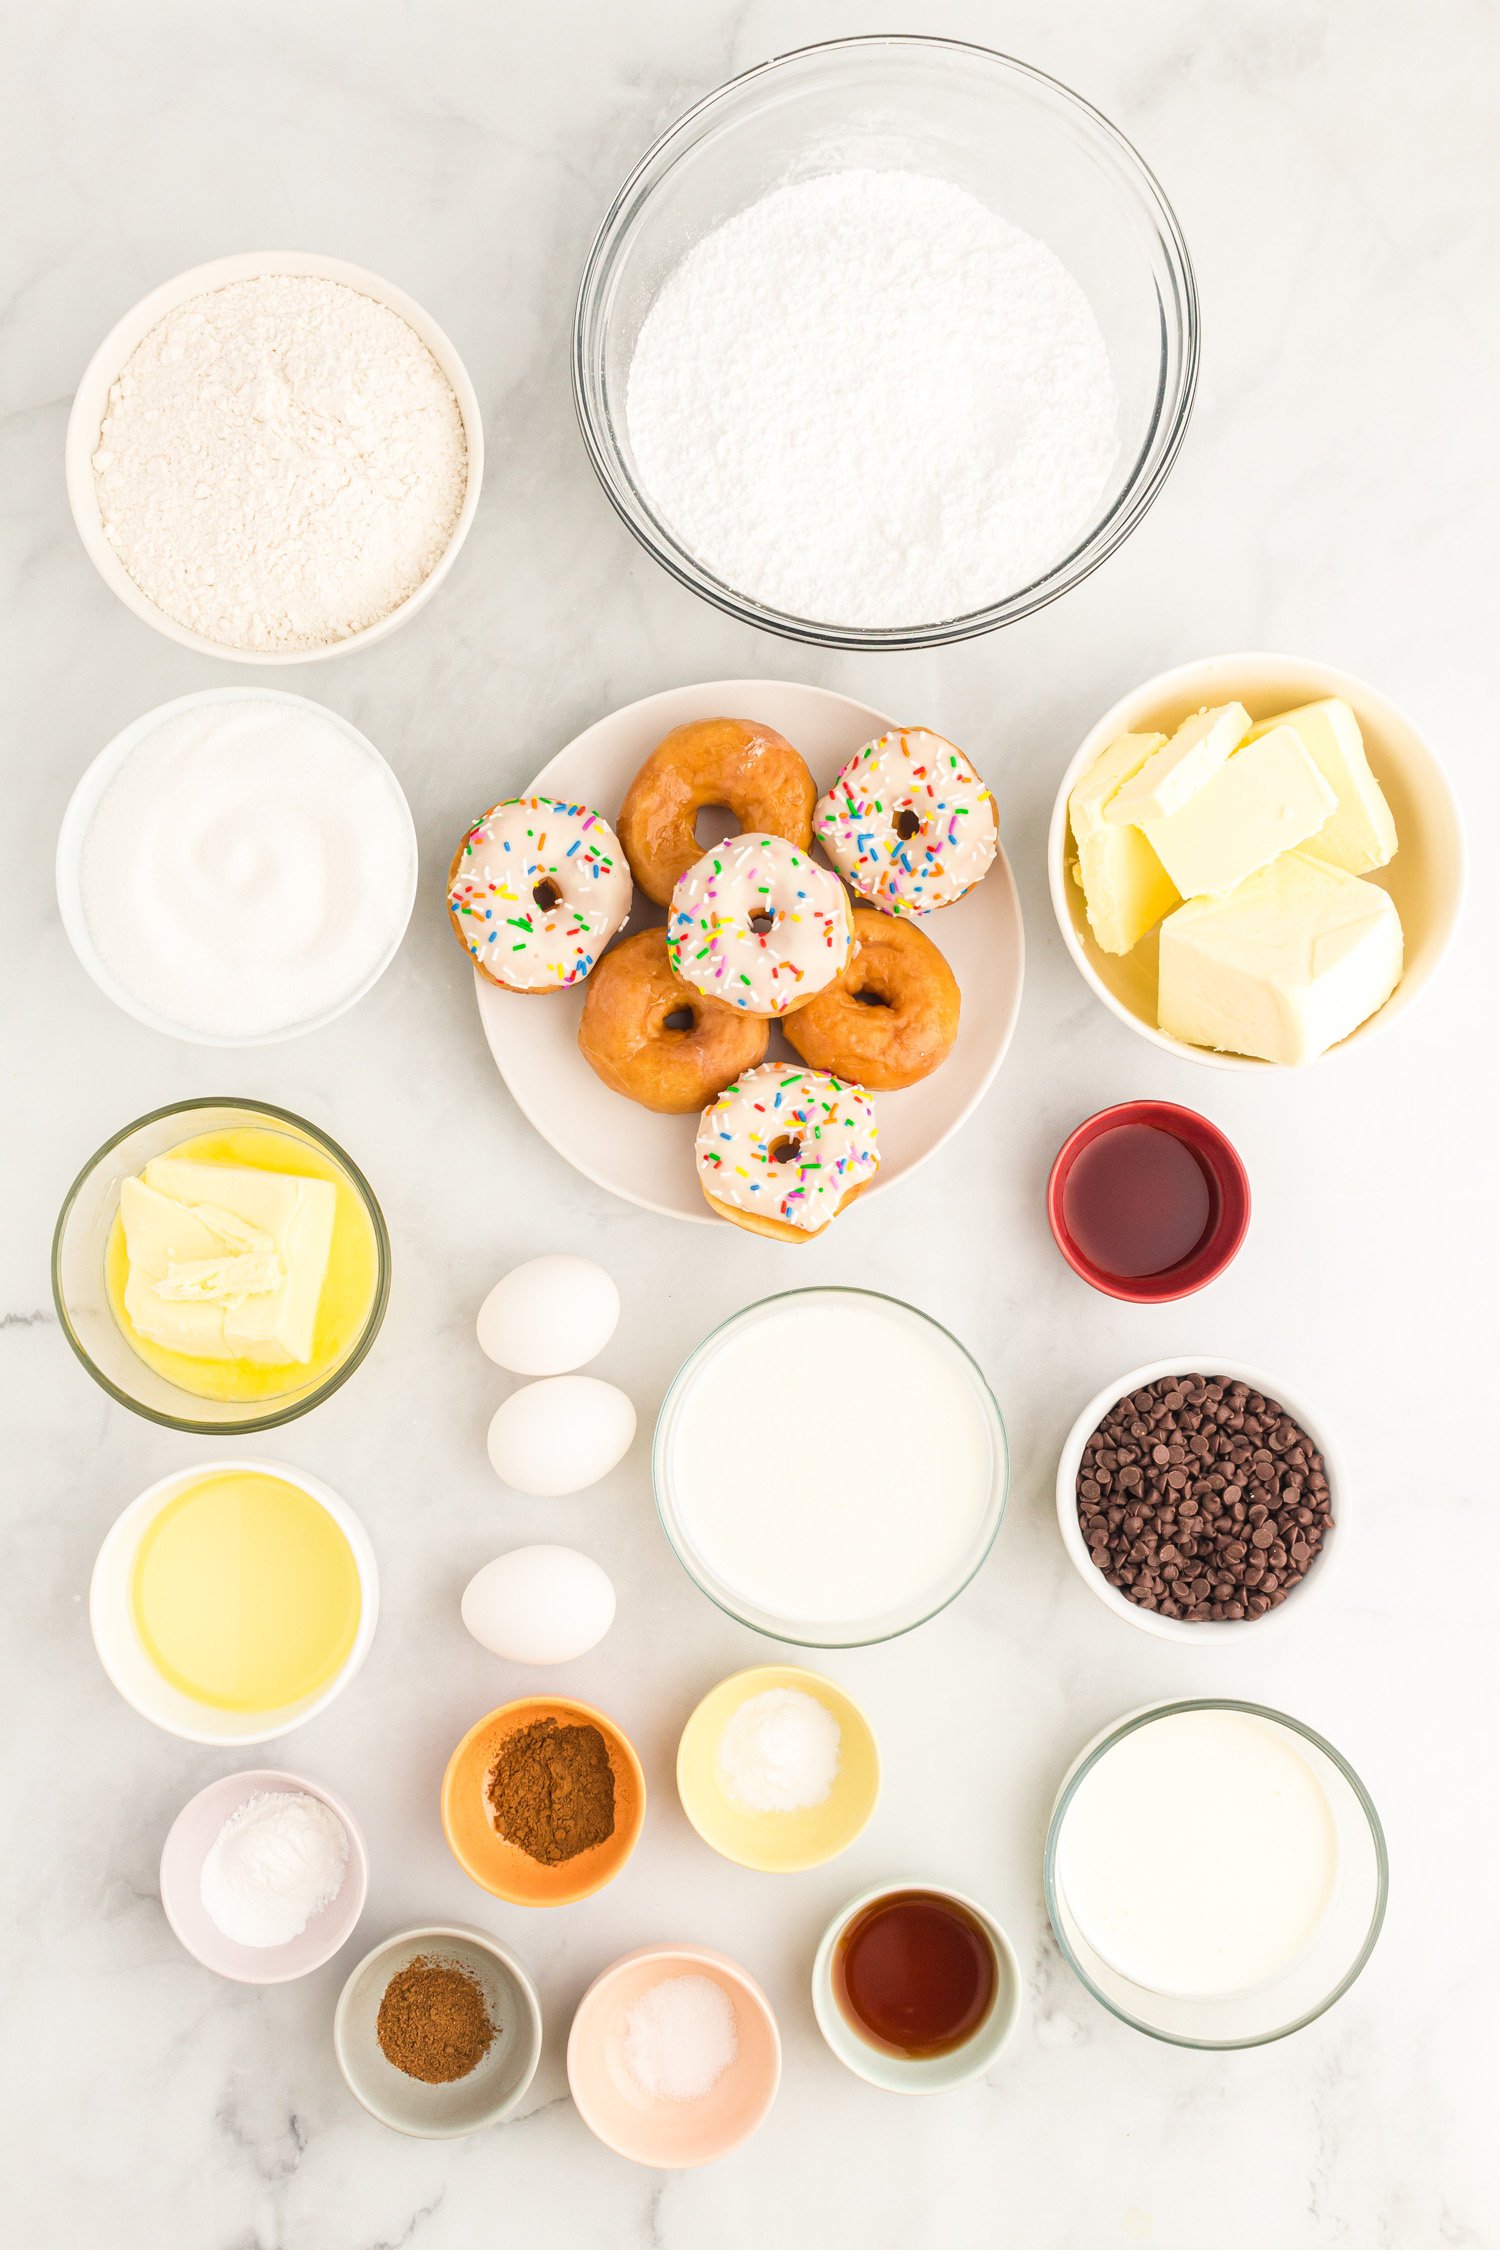 ingredients for making donut recipe